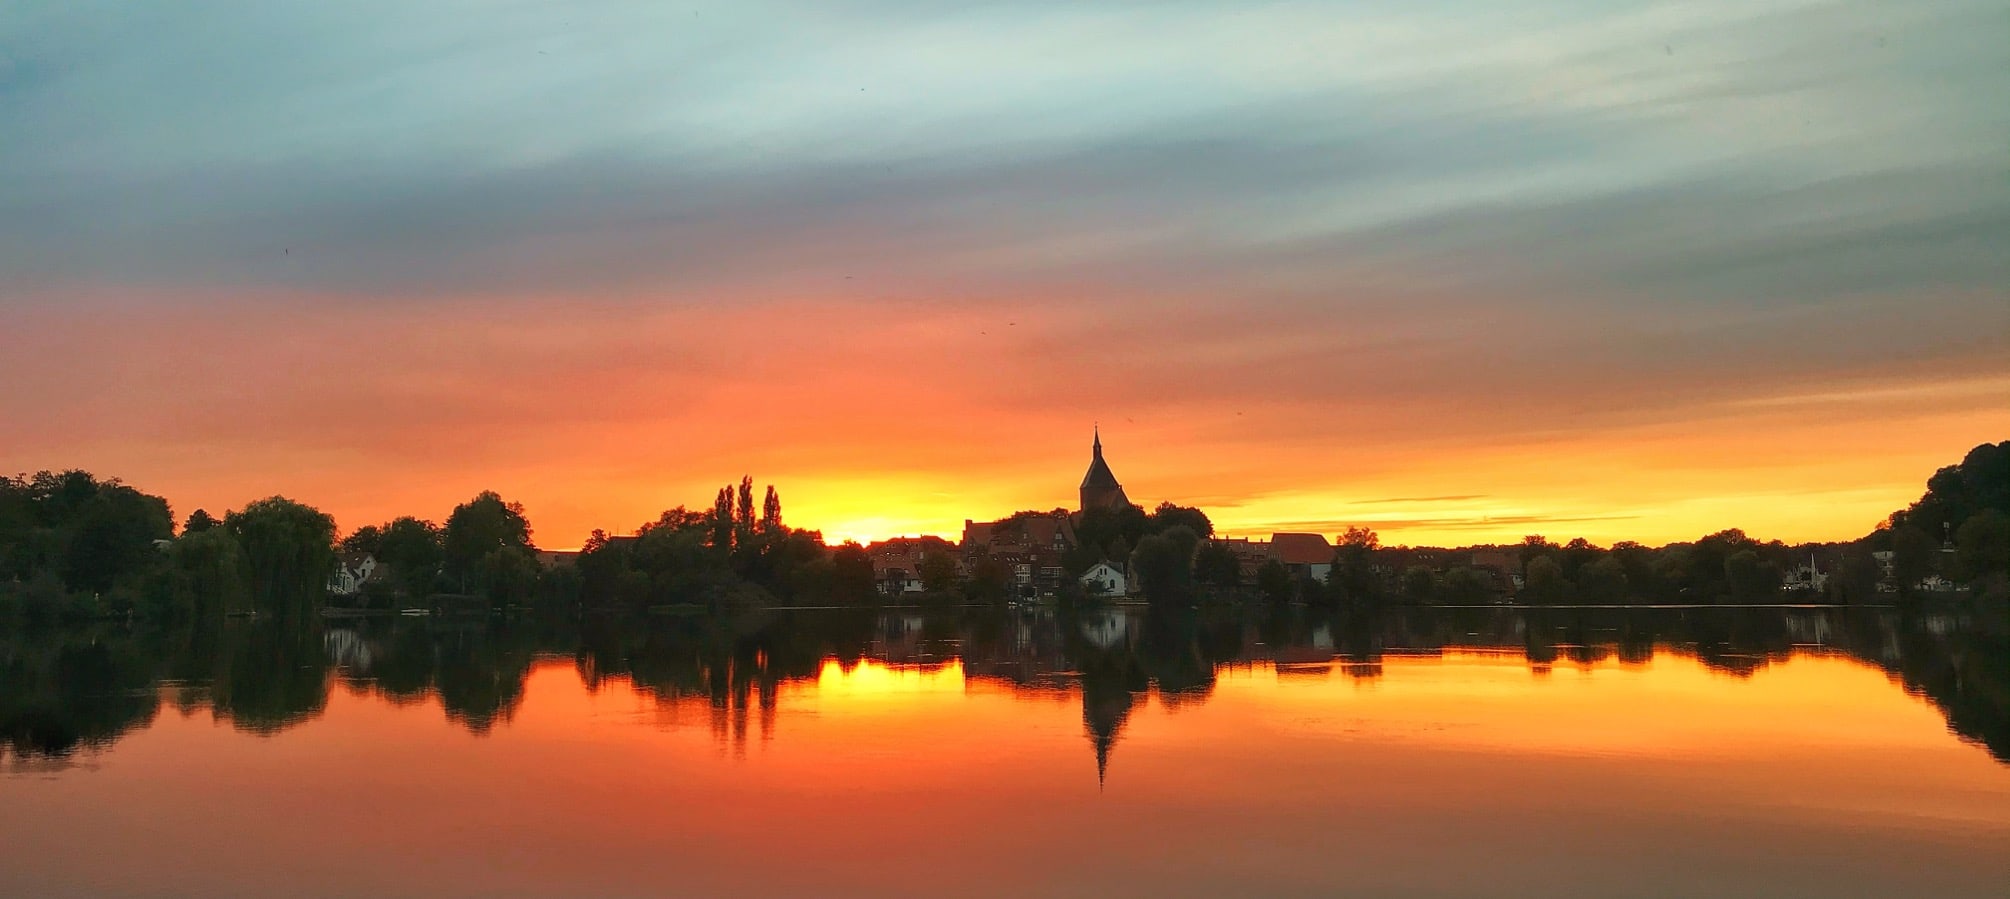 Sonnenuntergang über dem Schulsee in Mölln